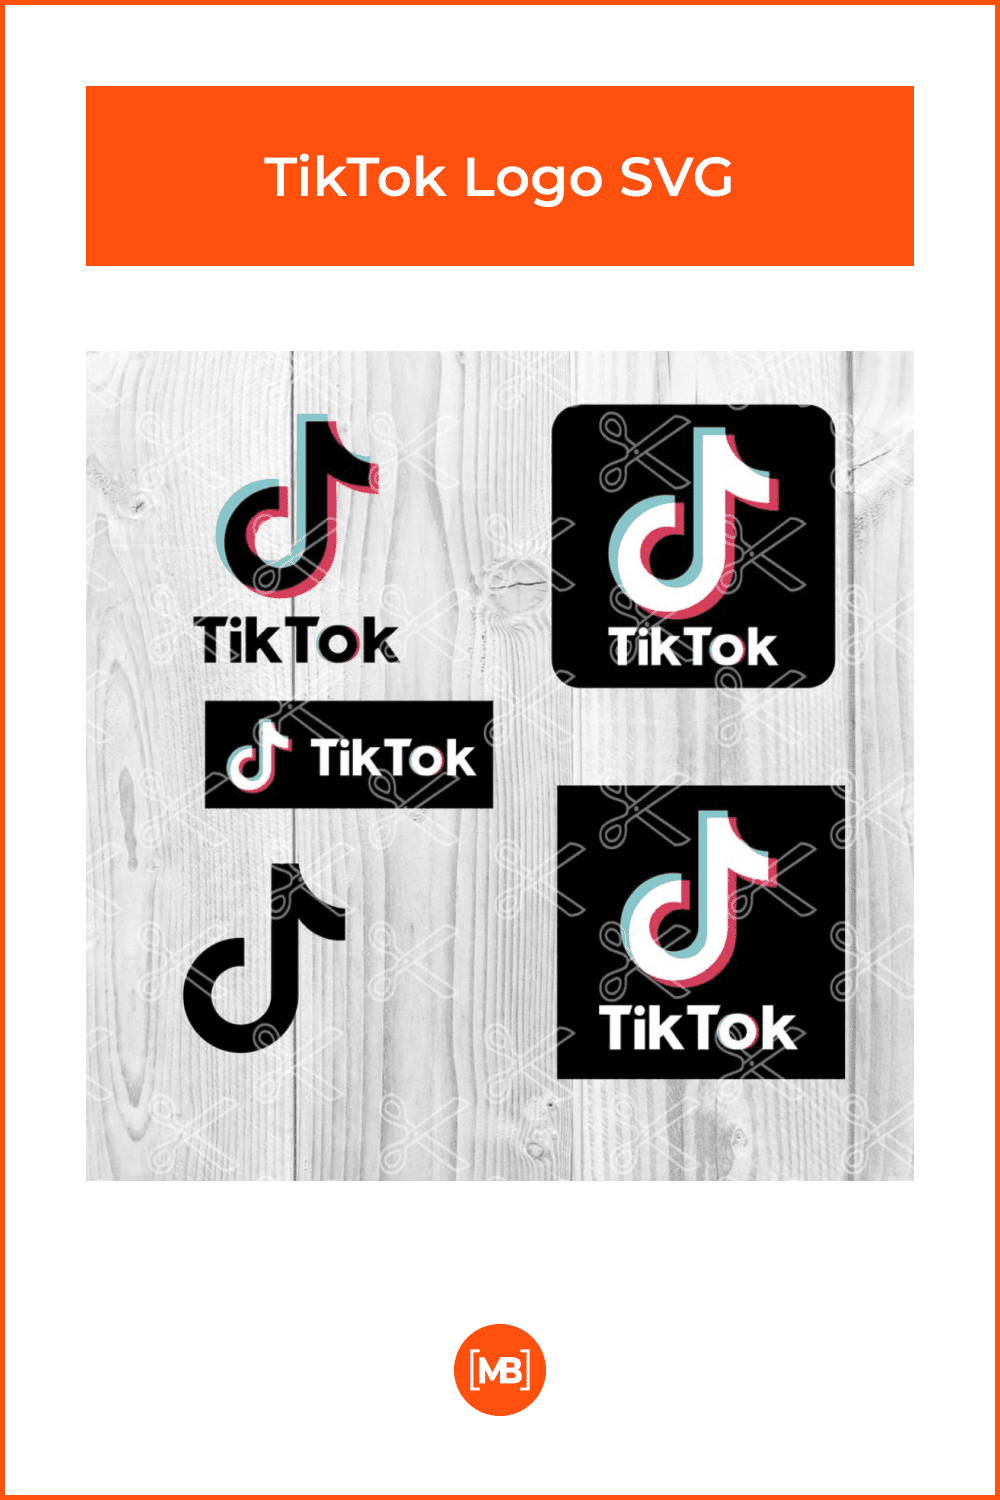 TikTok Logo SVG.